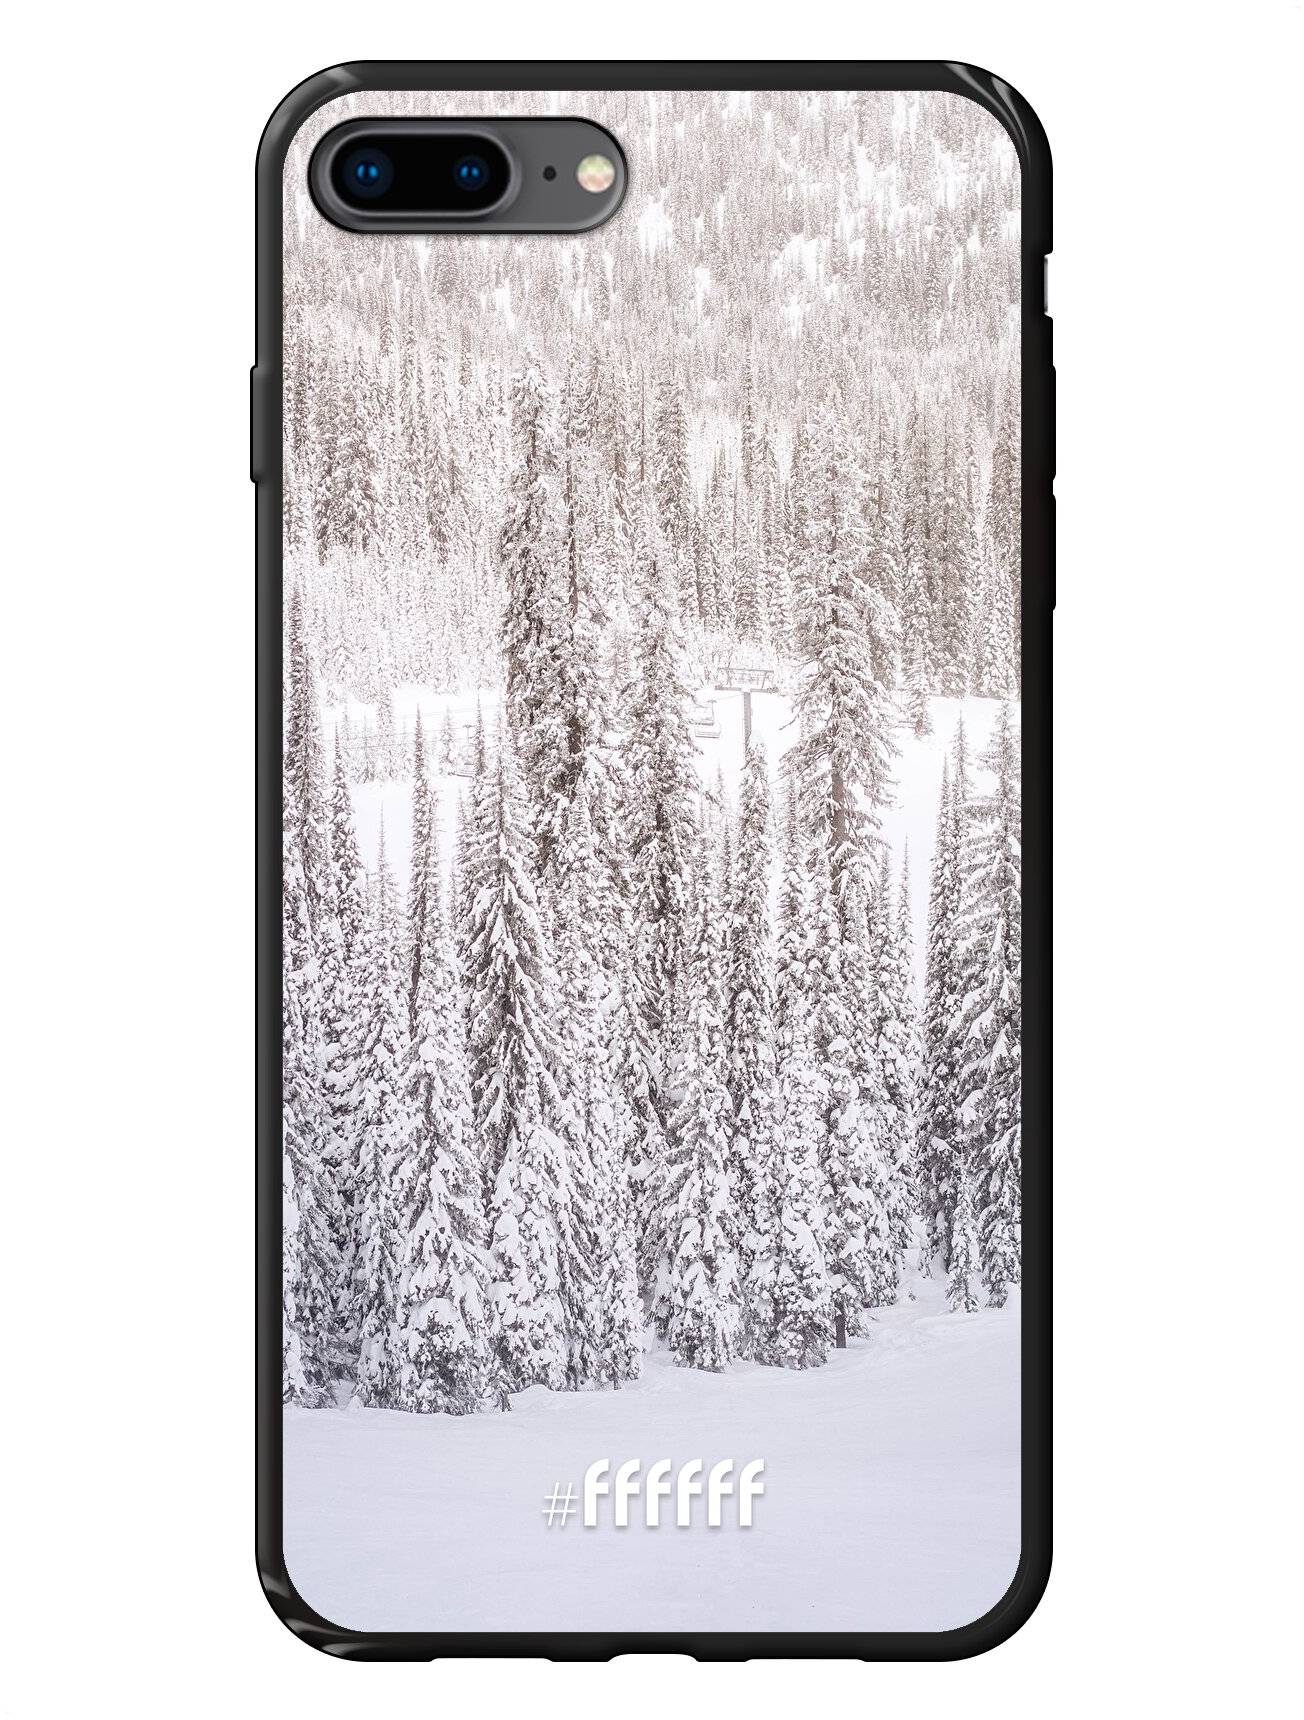 Snowy iPhone 7 Plus